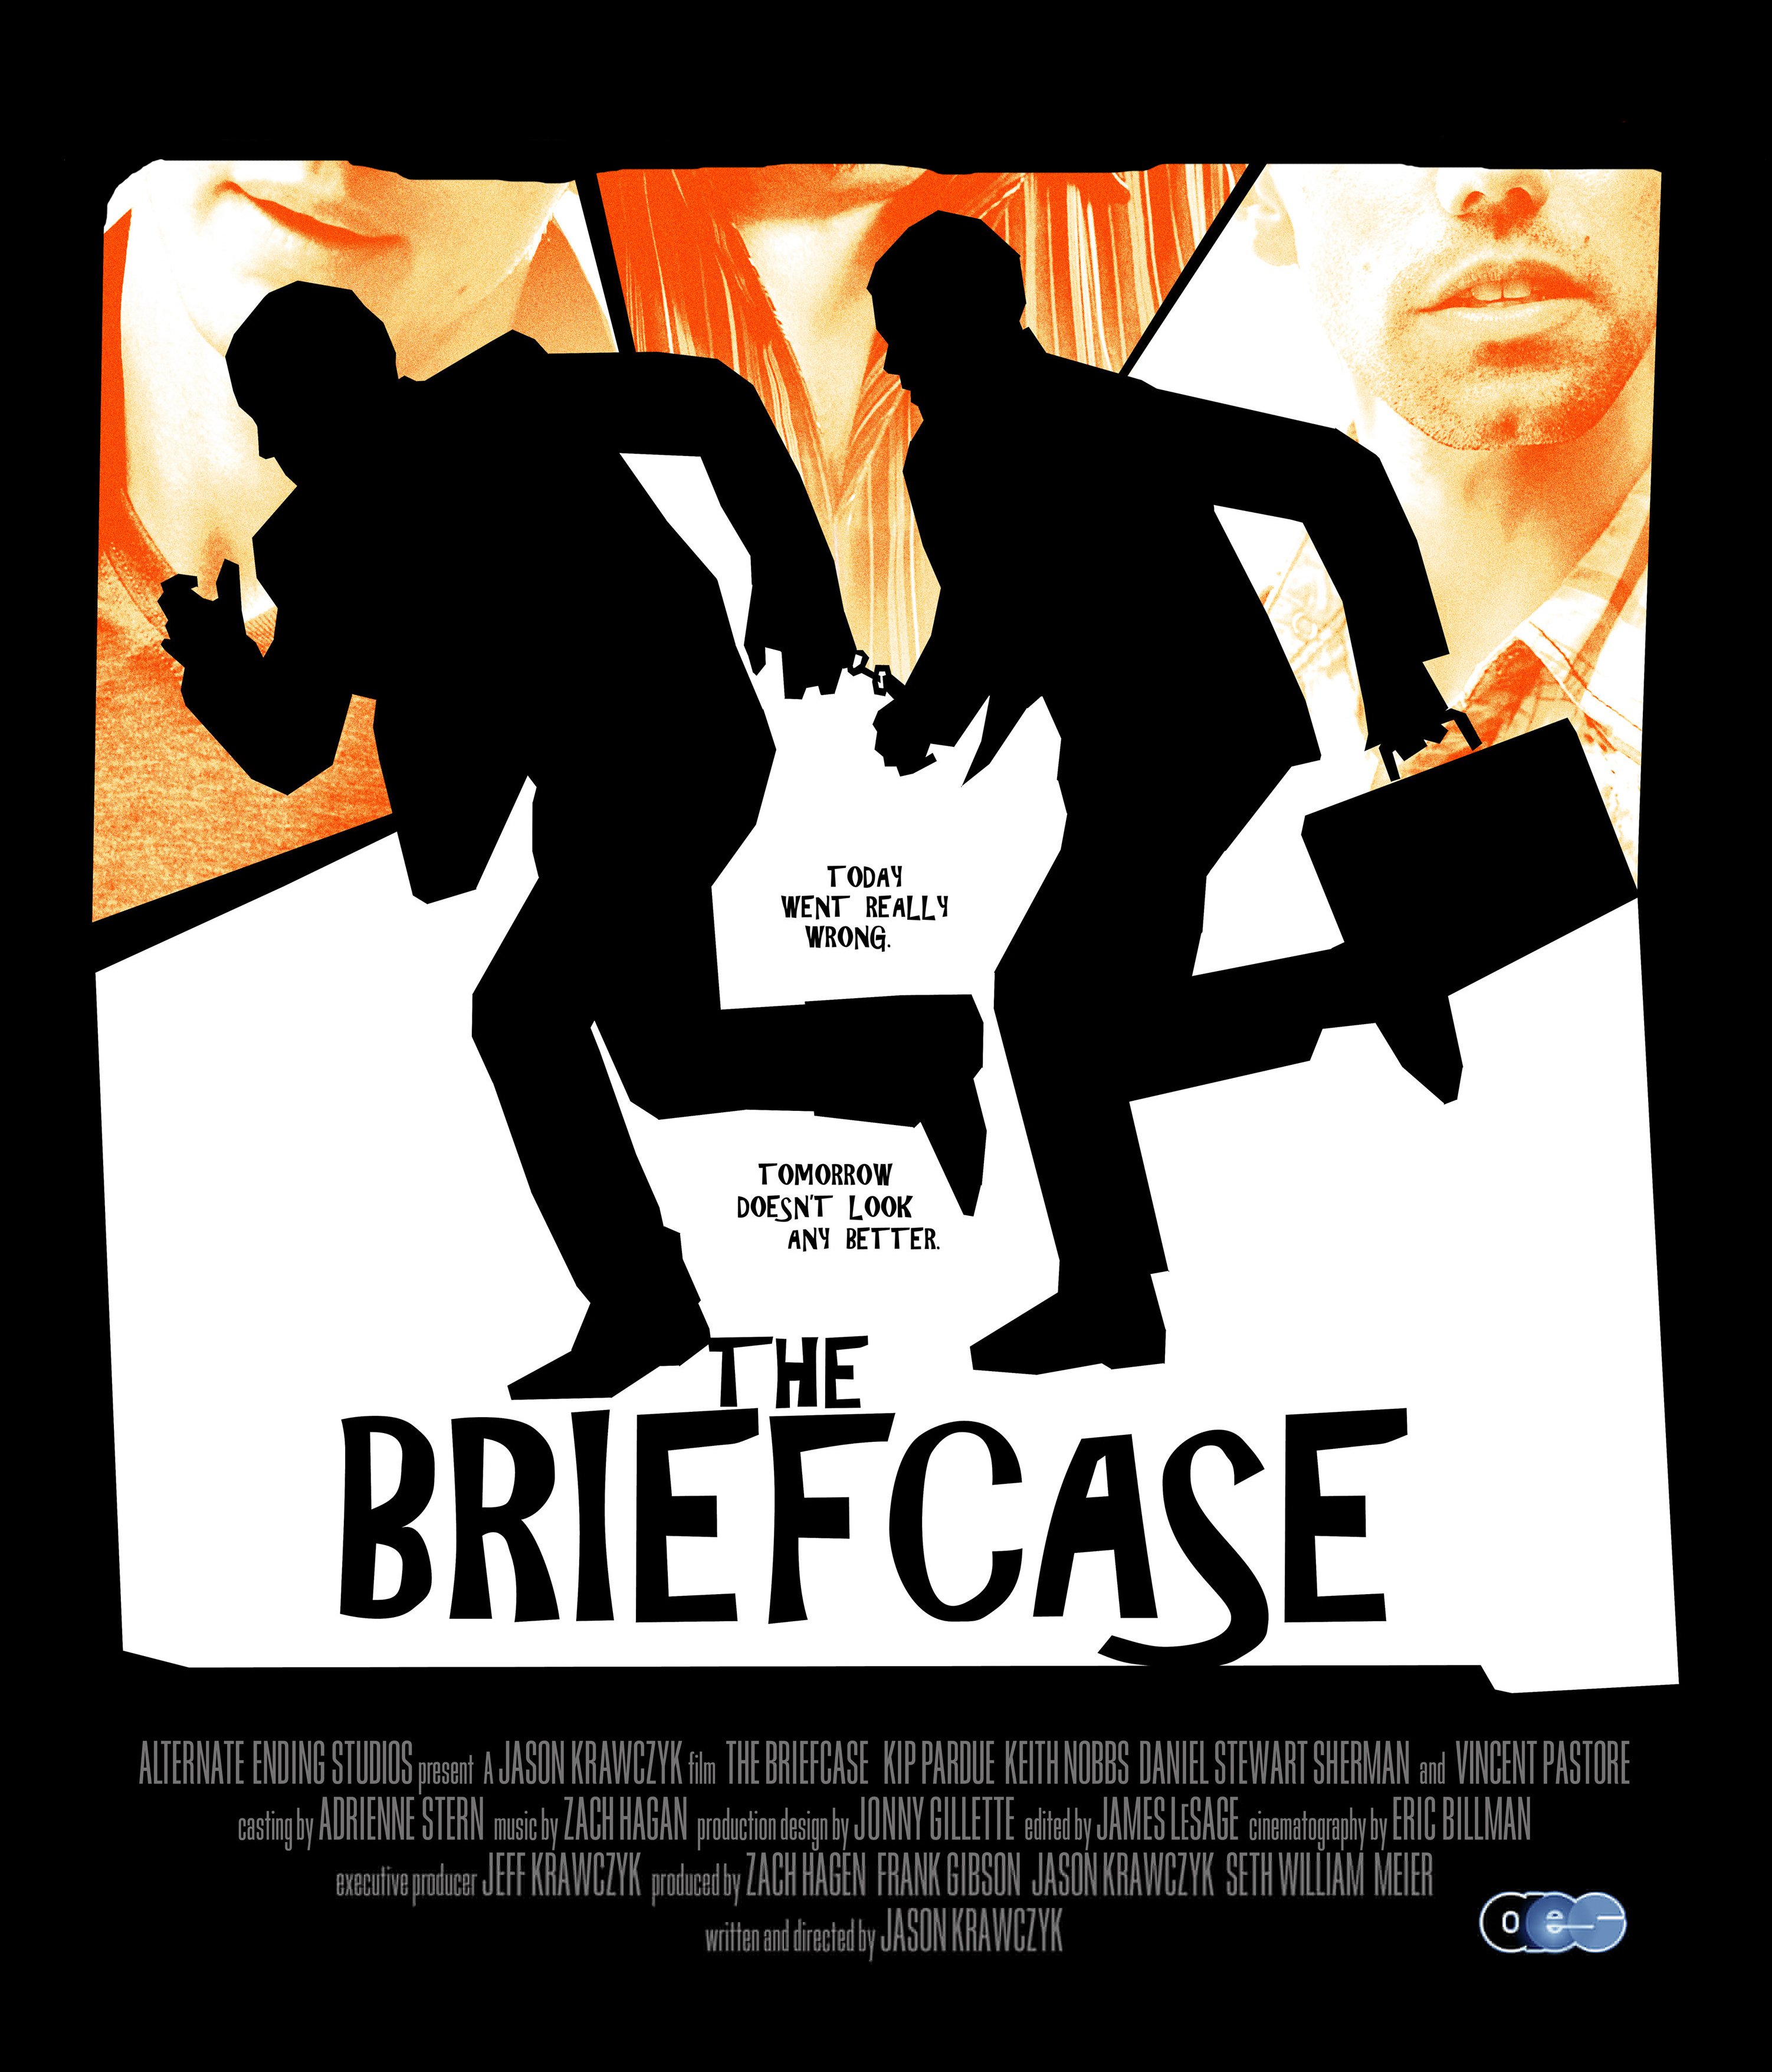 Briefcase pic